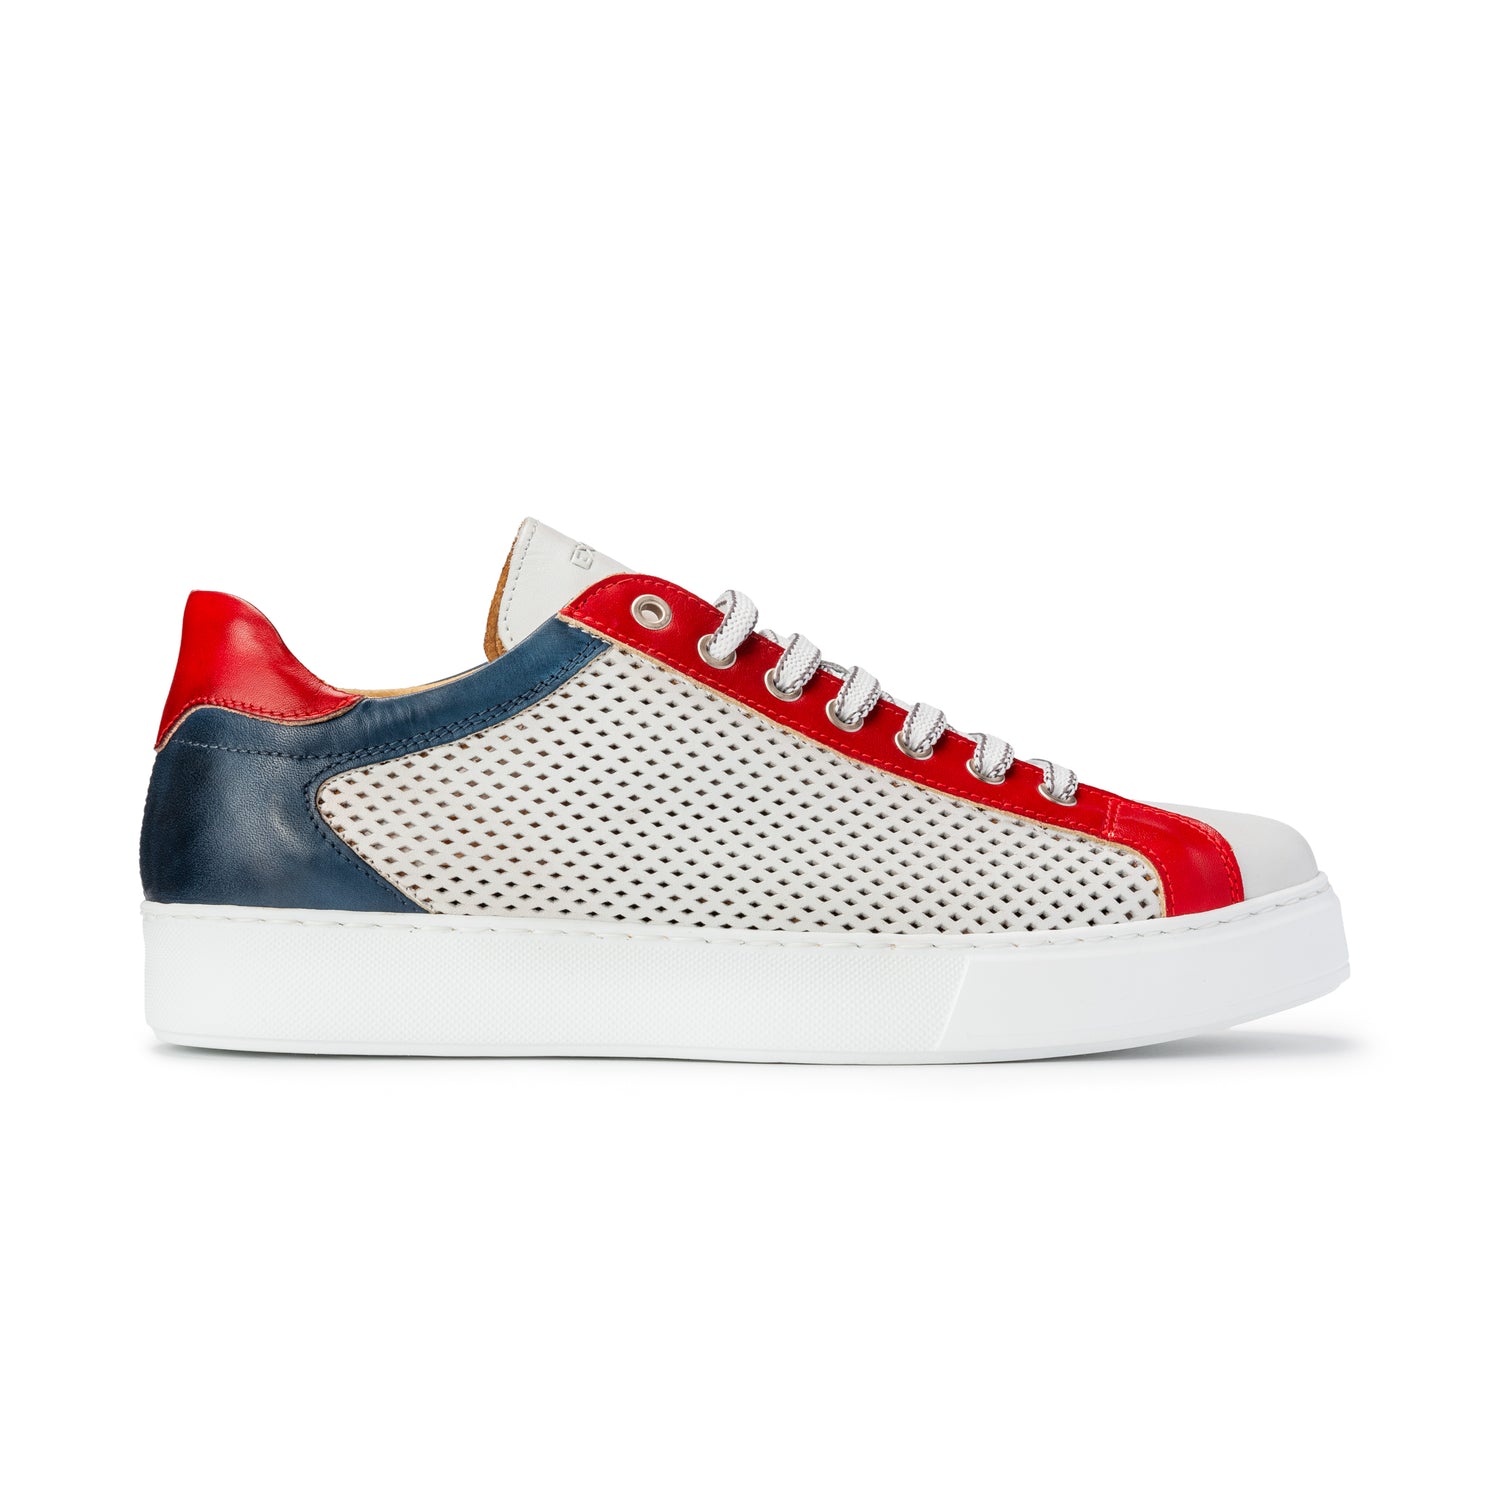 Scarpa Sneakers Uomo Bianca/Rossa/Blu